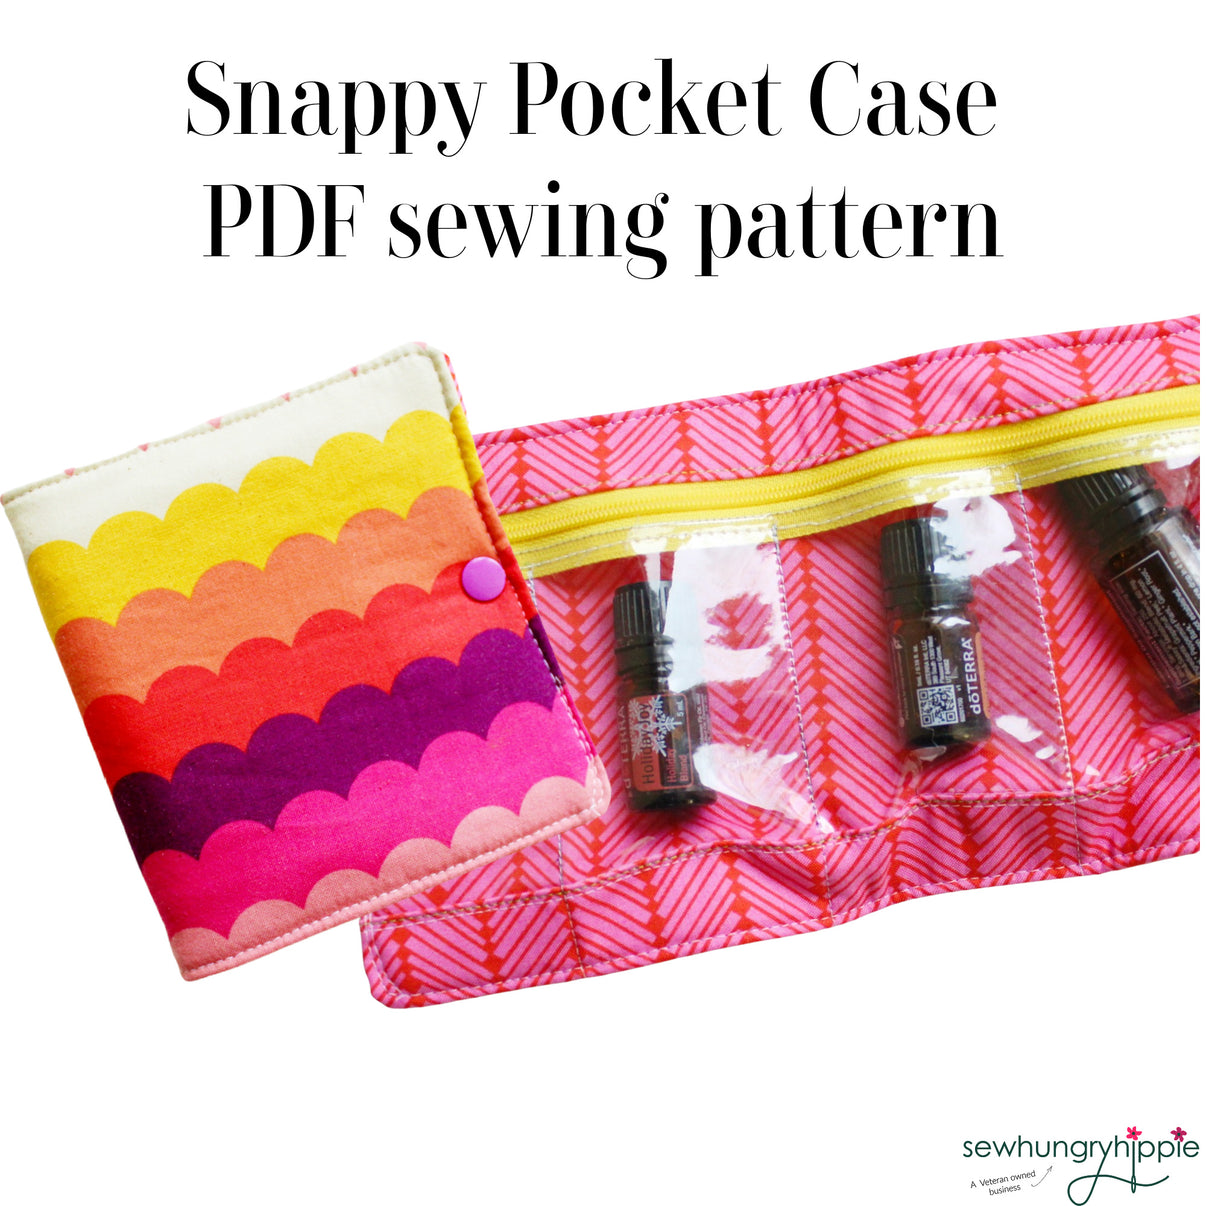 Snappy Pocket Case PDF – SewHungryhippie